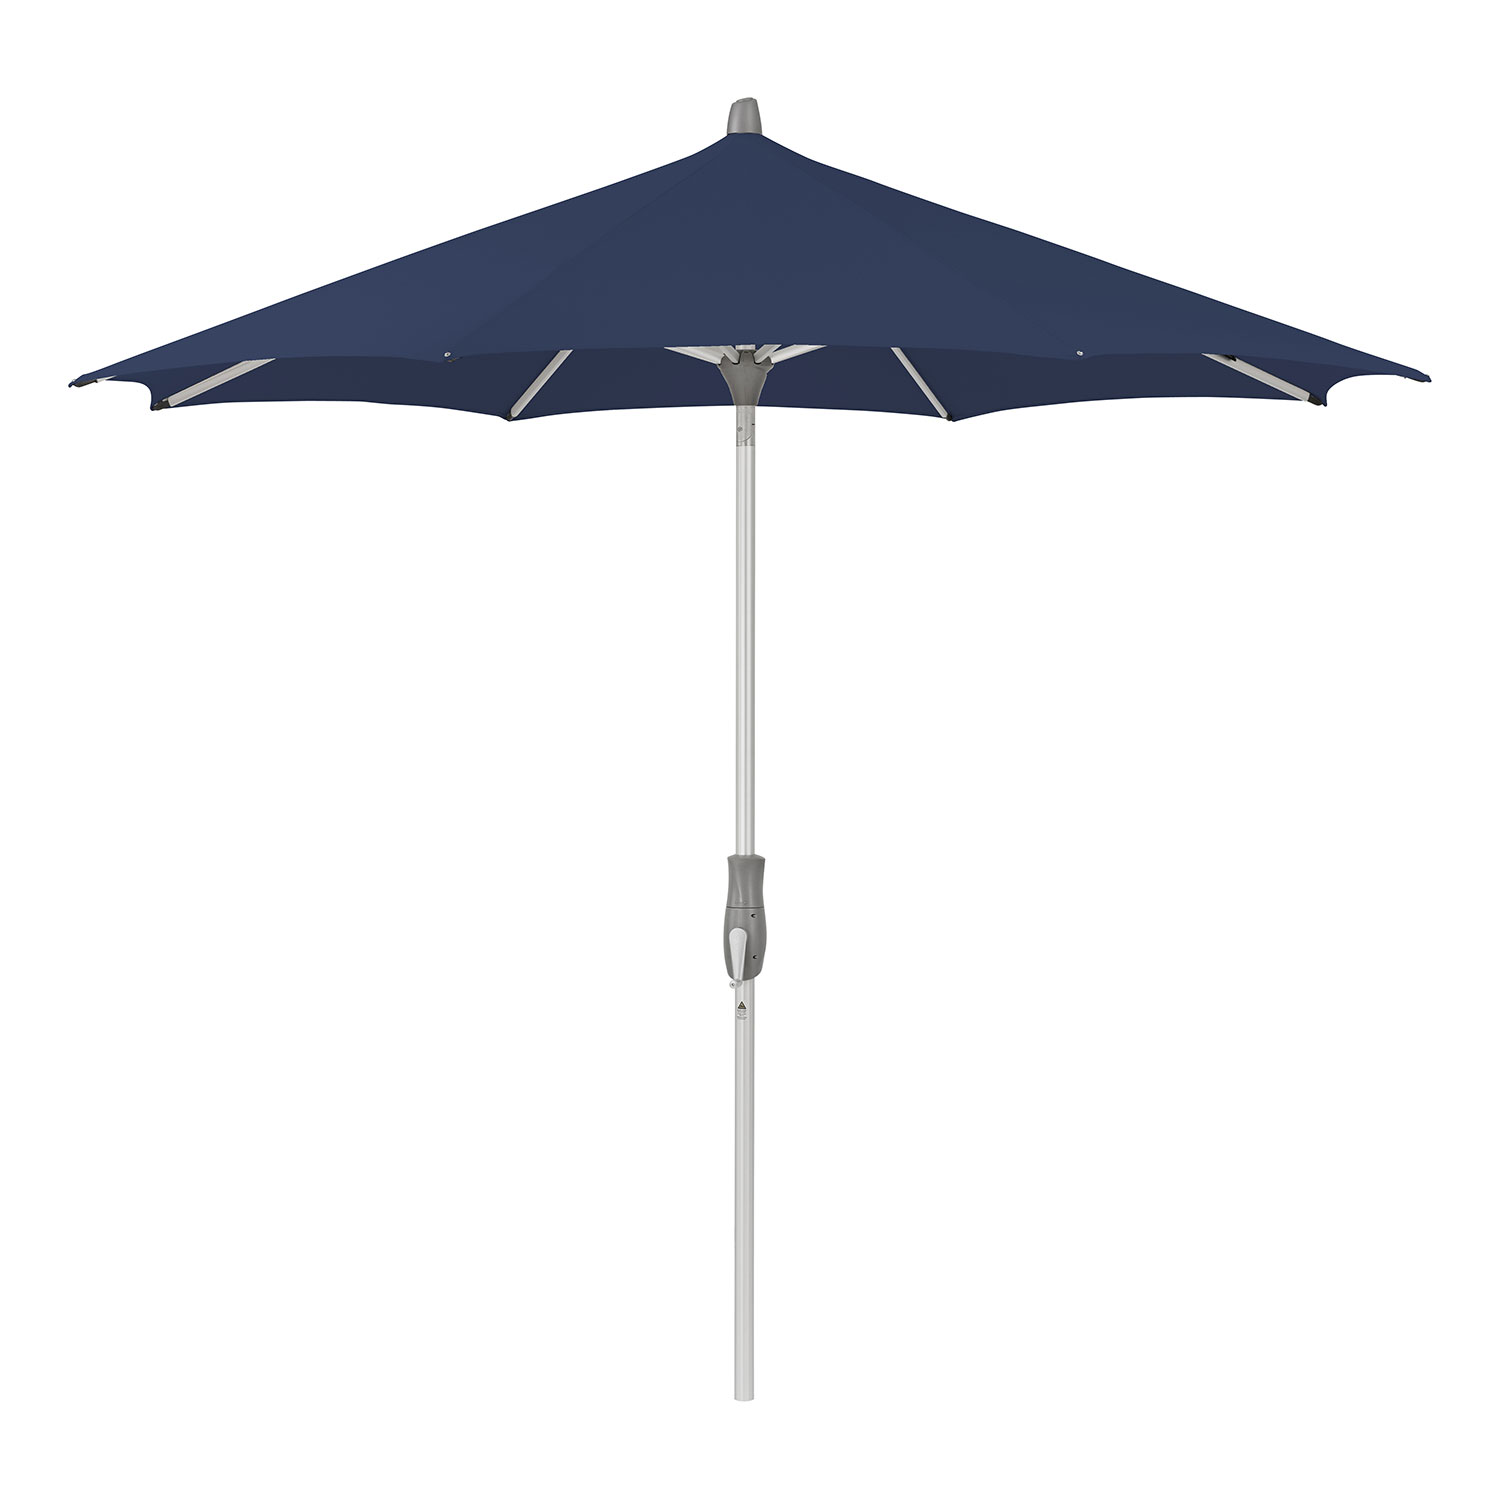 Glatz Alu-twist parasol 330 cm kat.5 530 atlantic